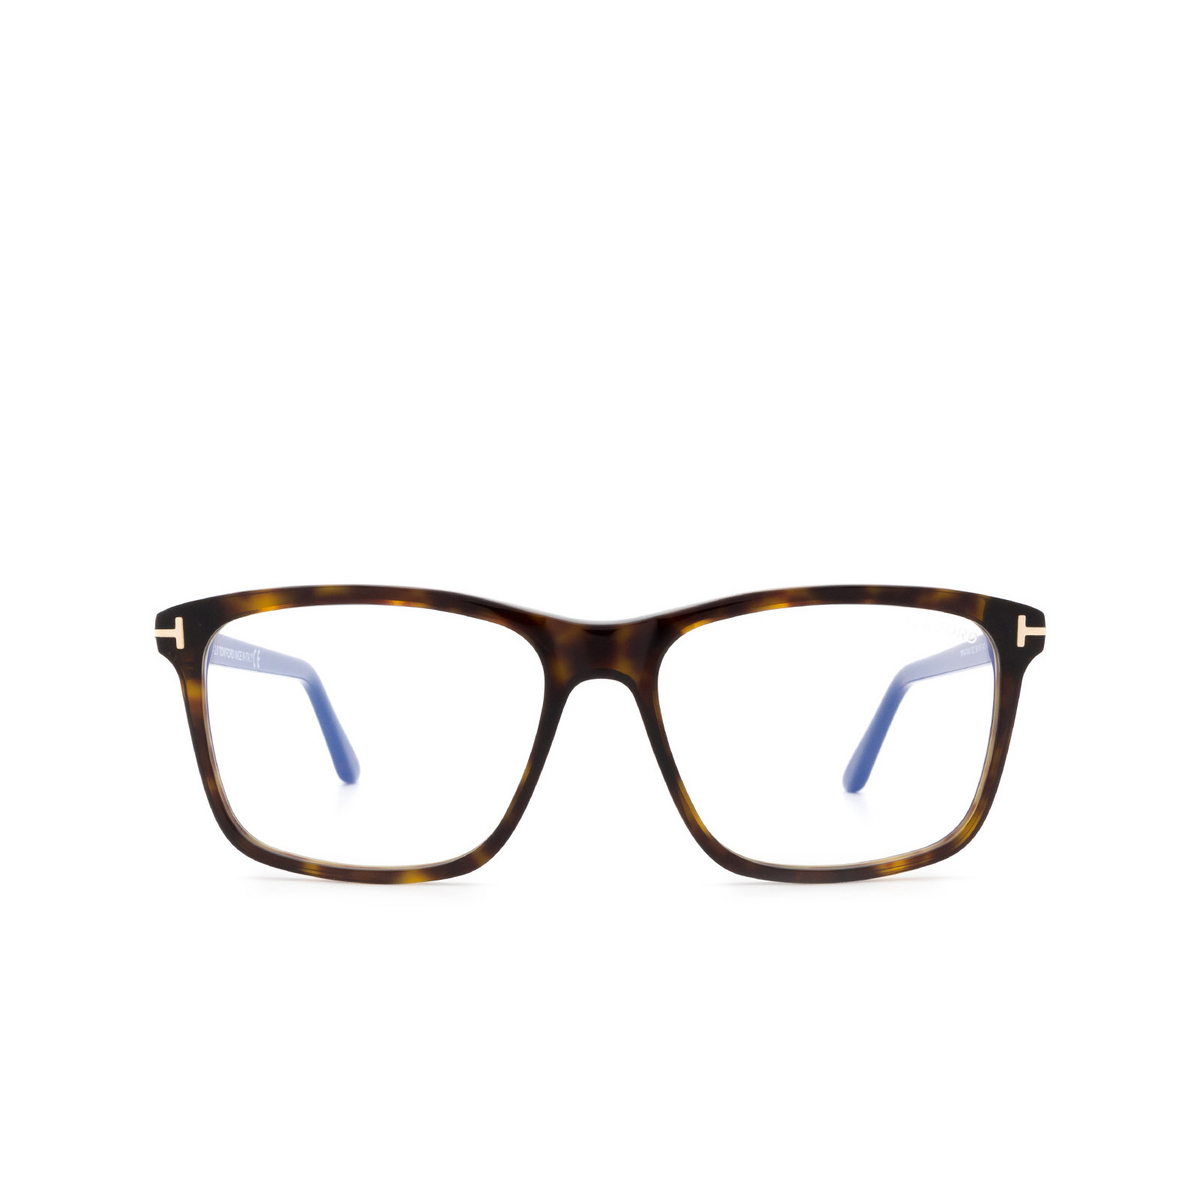 Tom Ford® Square Eyeglasses: FT5479-B color Dark Havana 052 - front view.